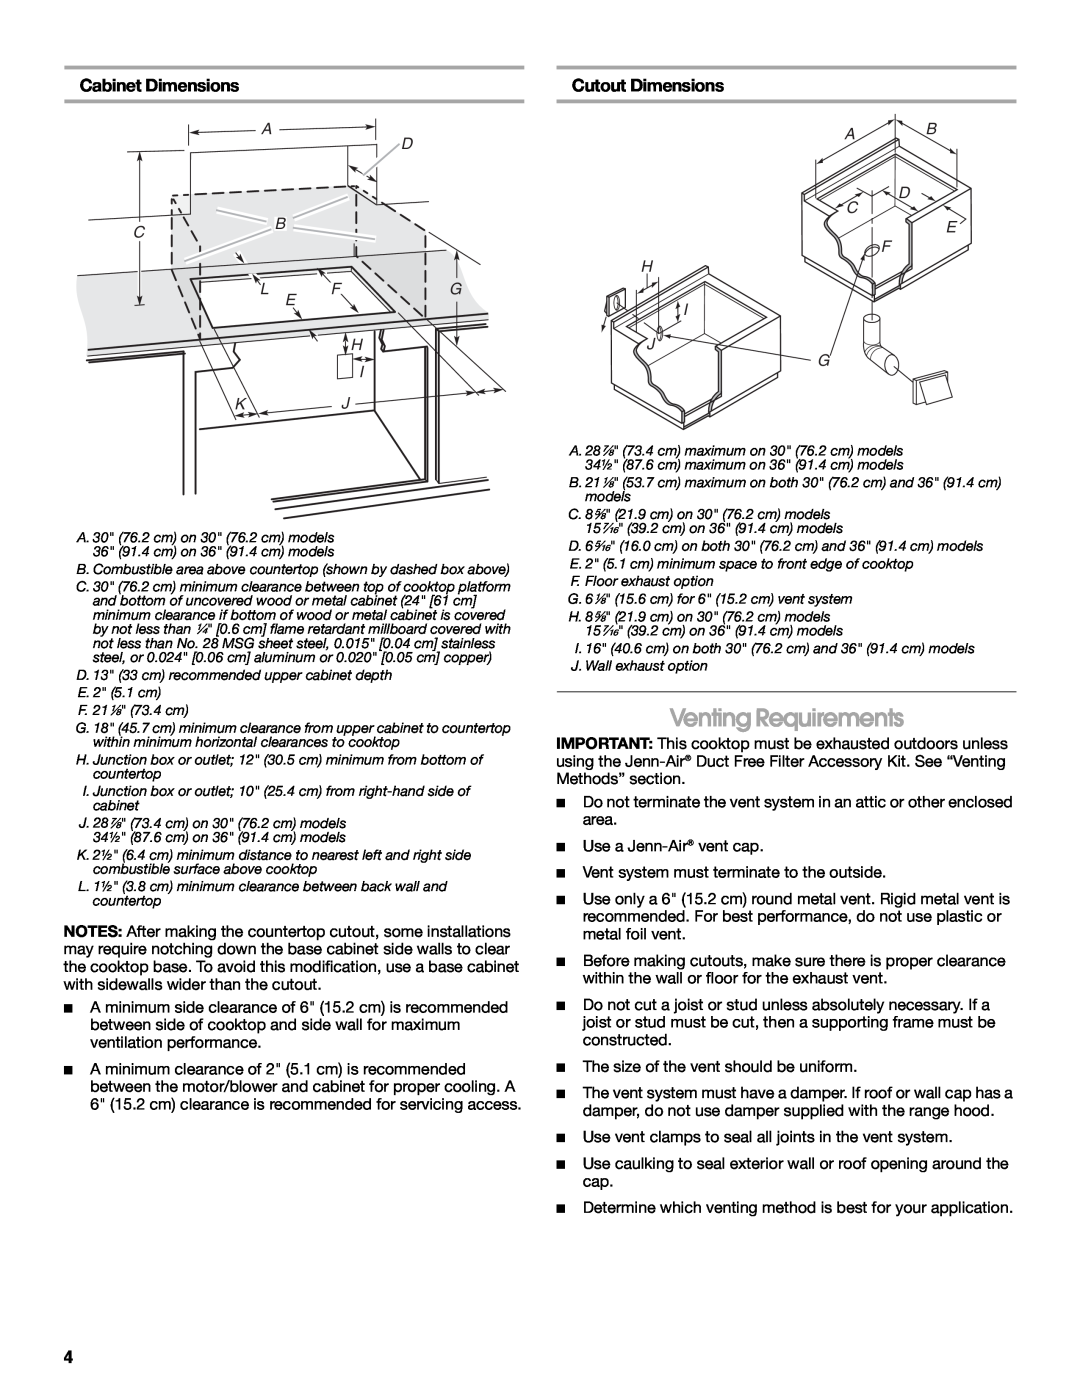 Jenn-Air W10436037B Venting Requirements, Cabinet Dimensions, Cutout Dimensions, A D Cb L Fg E H I Kj, D C E F H I J G 